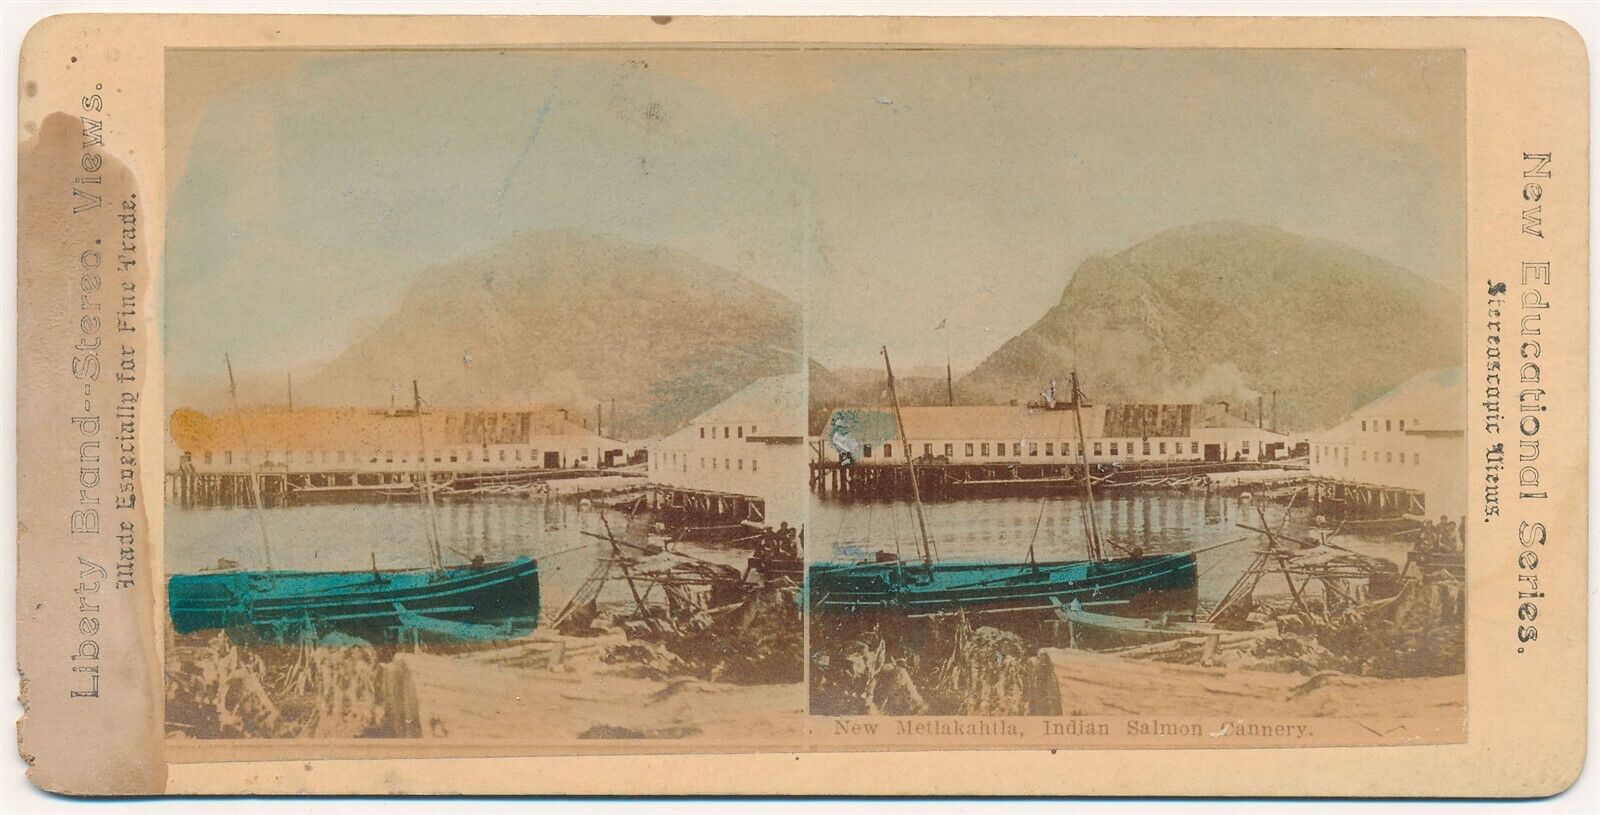 ALASKA SV - New Metlakahtla Cannery - Liberty Brand 1890s